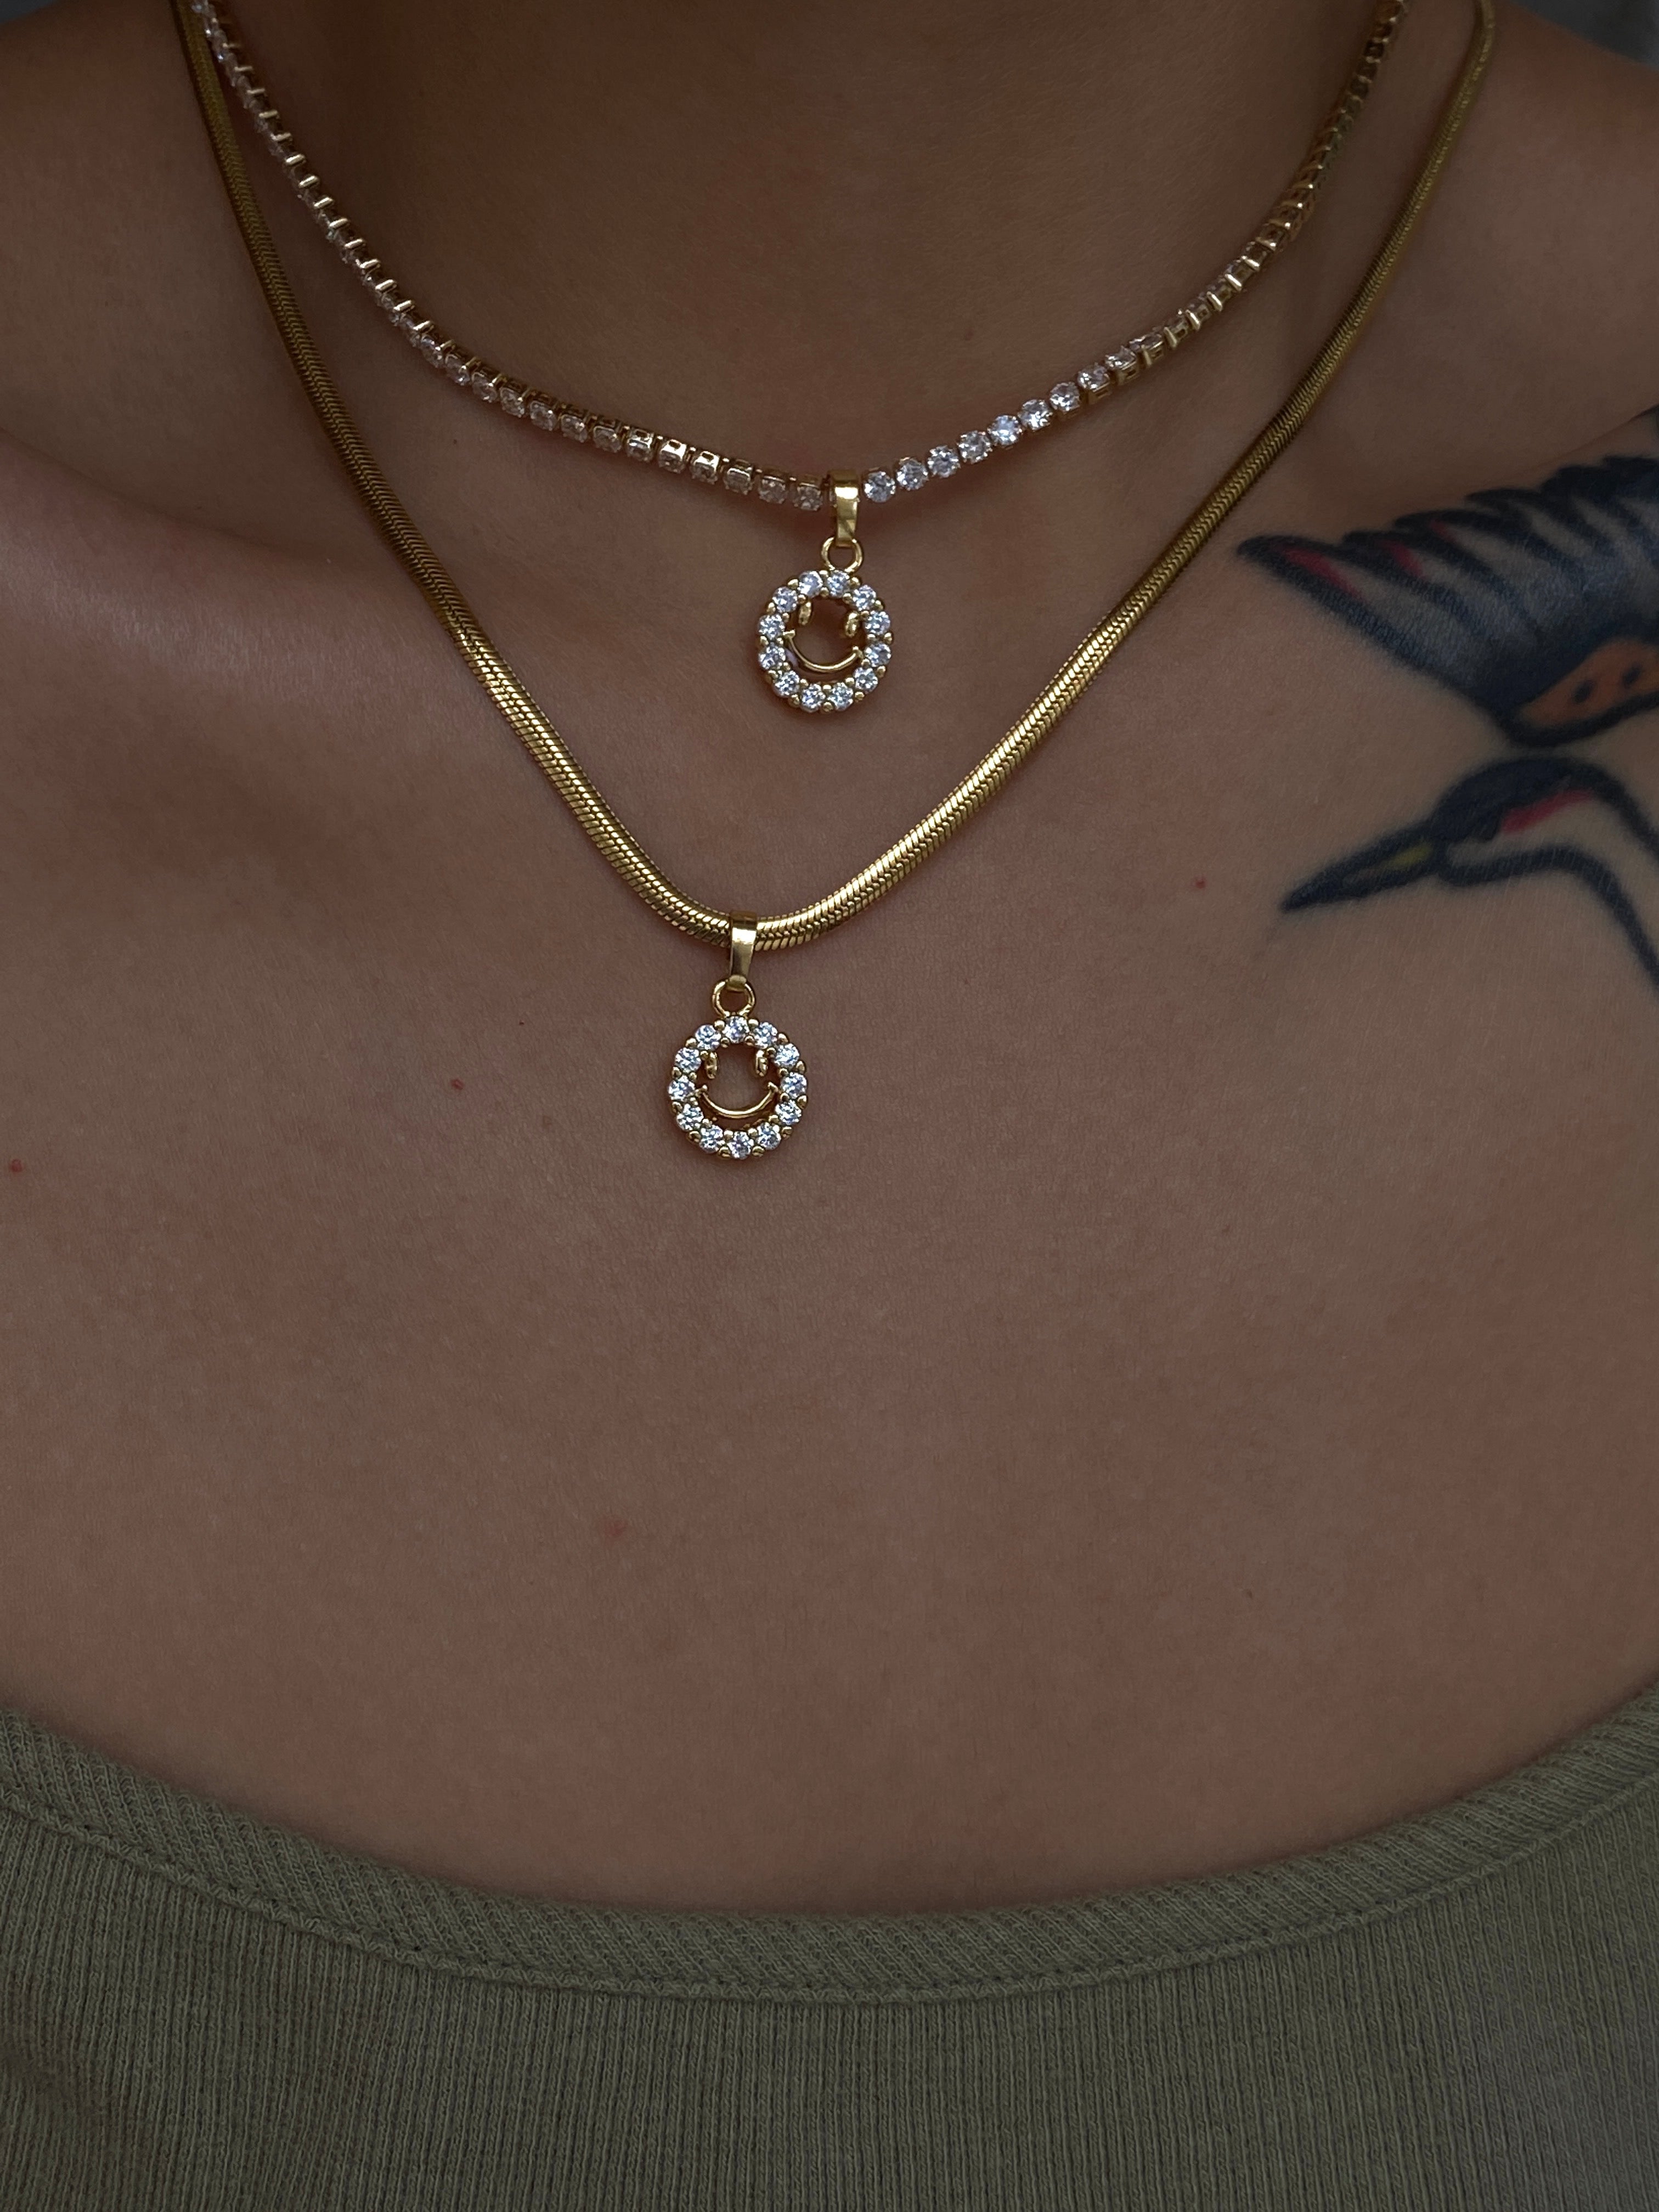 Micro Paved Smiley Pendant on Figaro/Herringbone/Rhinestone Necklace Chain